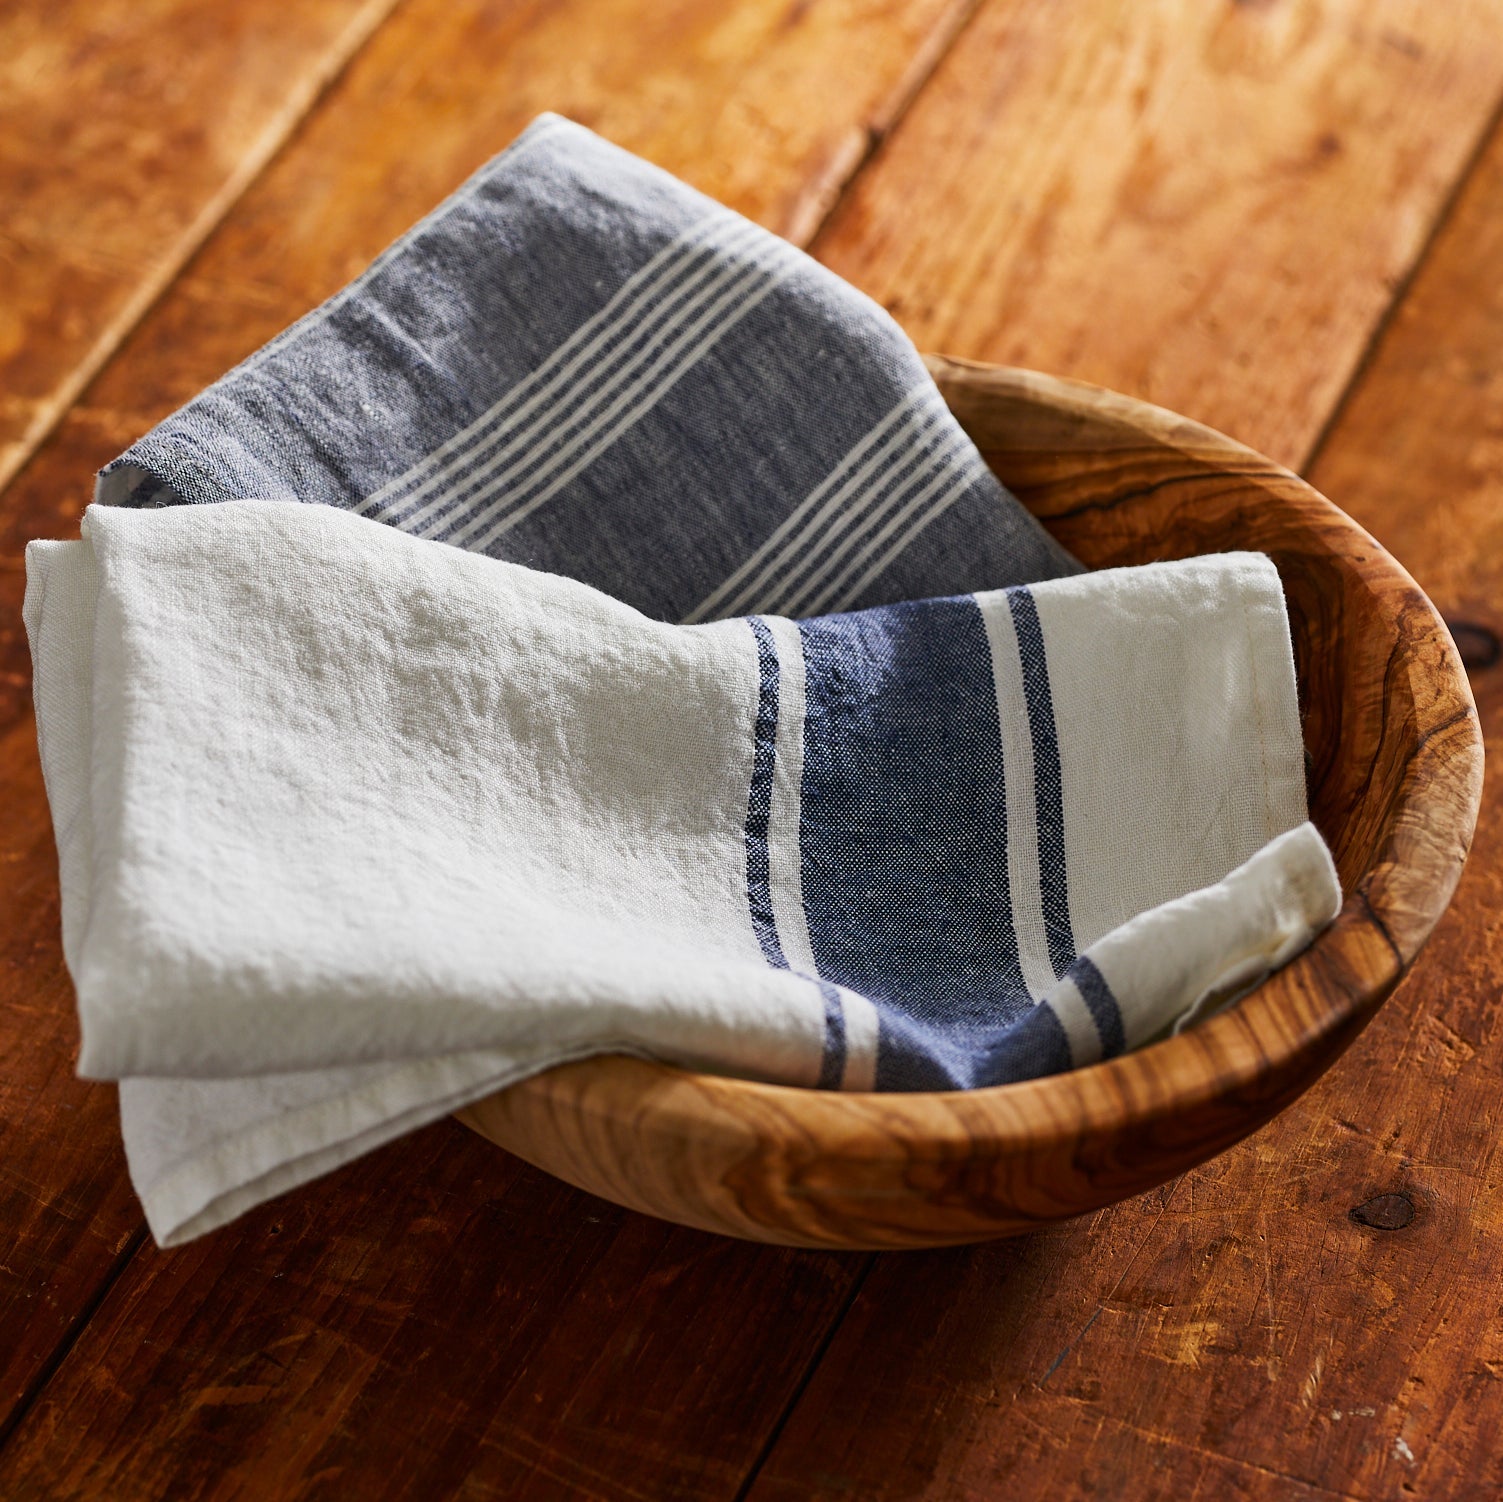 Trattoria Blue Kitchen Towels in soft Italian Linen, Set of 2 from Caskata